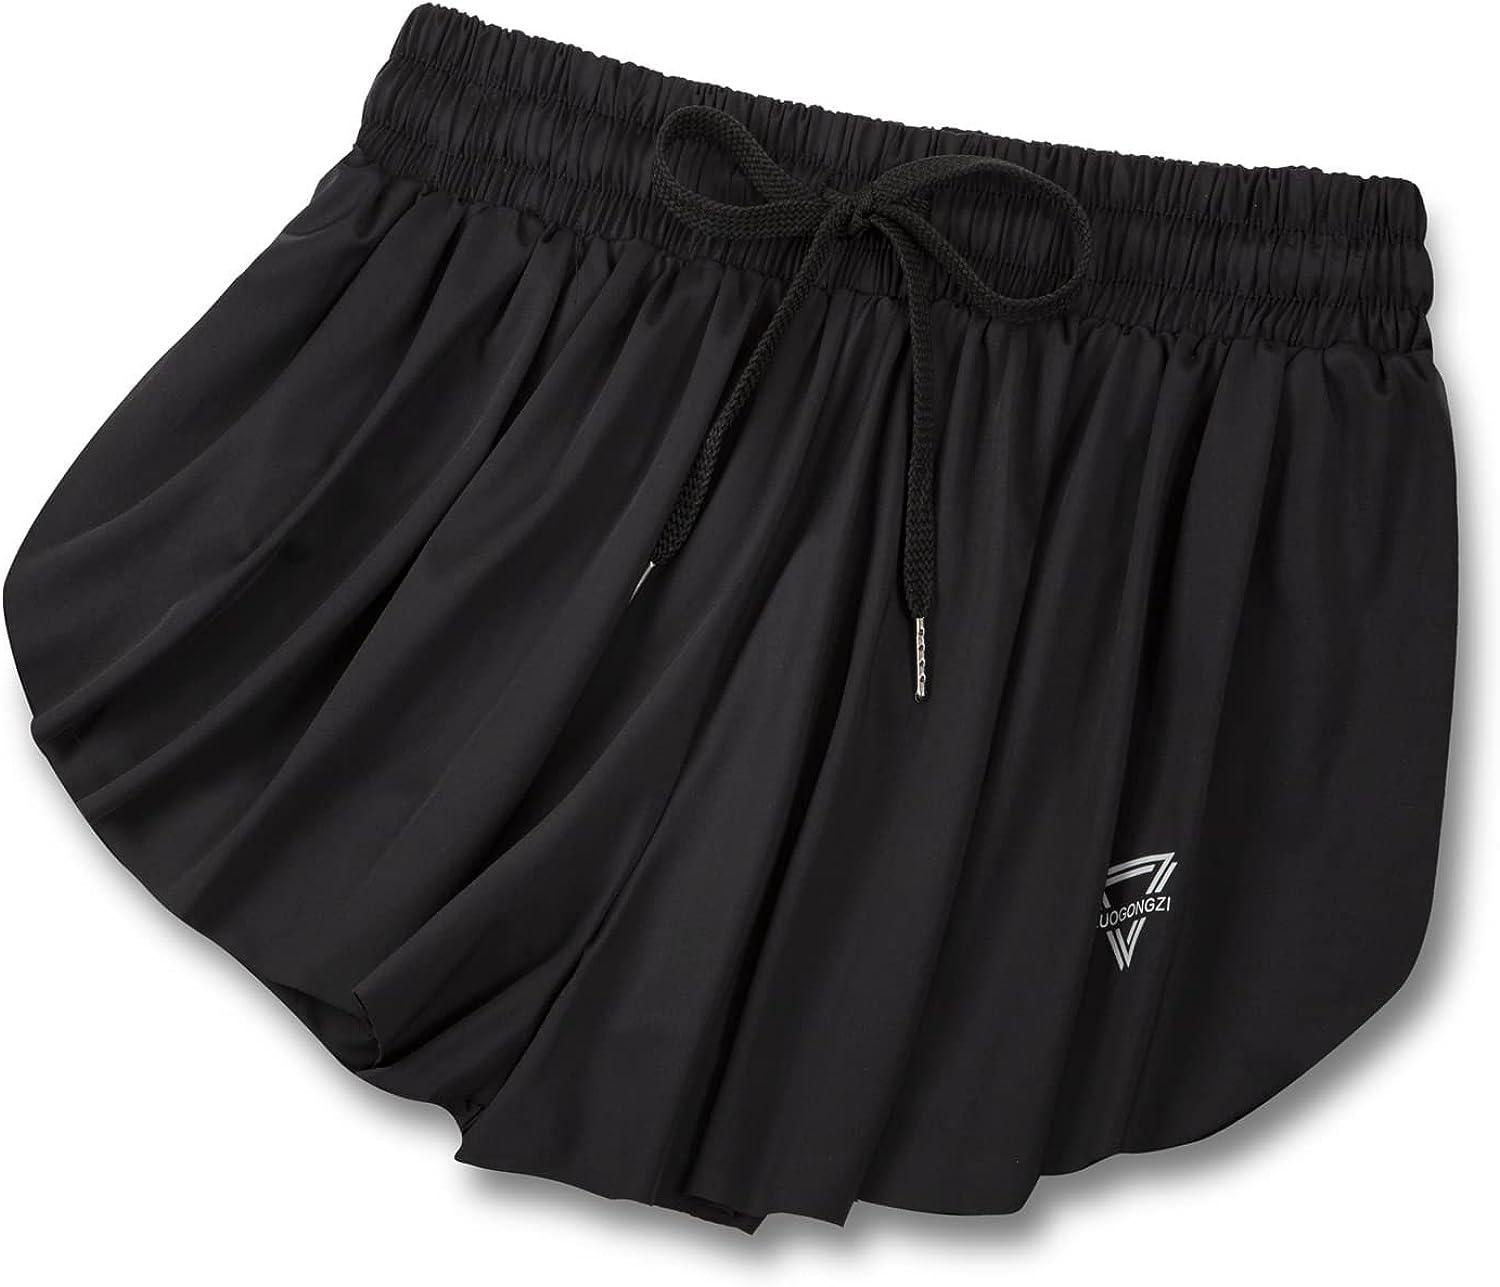 Tennis Skirts for Women Athletic Skort Golf Skort Skirts Pleated Mini Skirt  for Running Yoga Dance Training : : Clothing, Shoes & Accessories